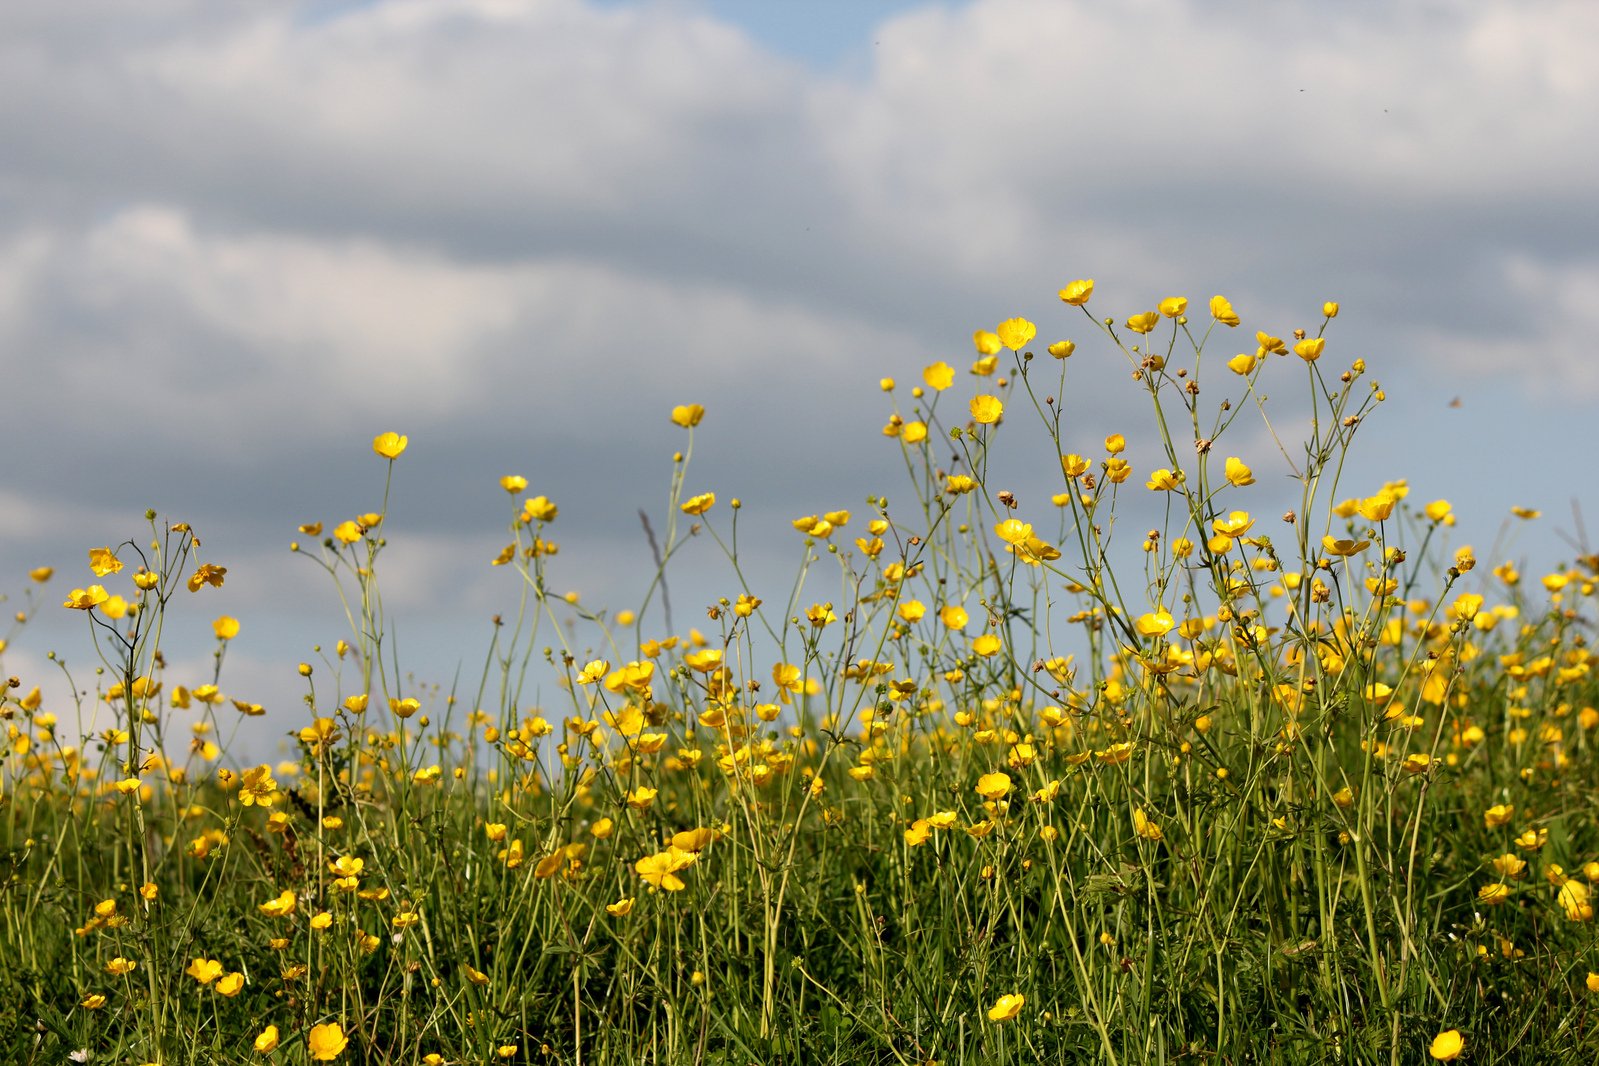 yellow flowers grow on a green grass field under a cloudy sky